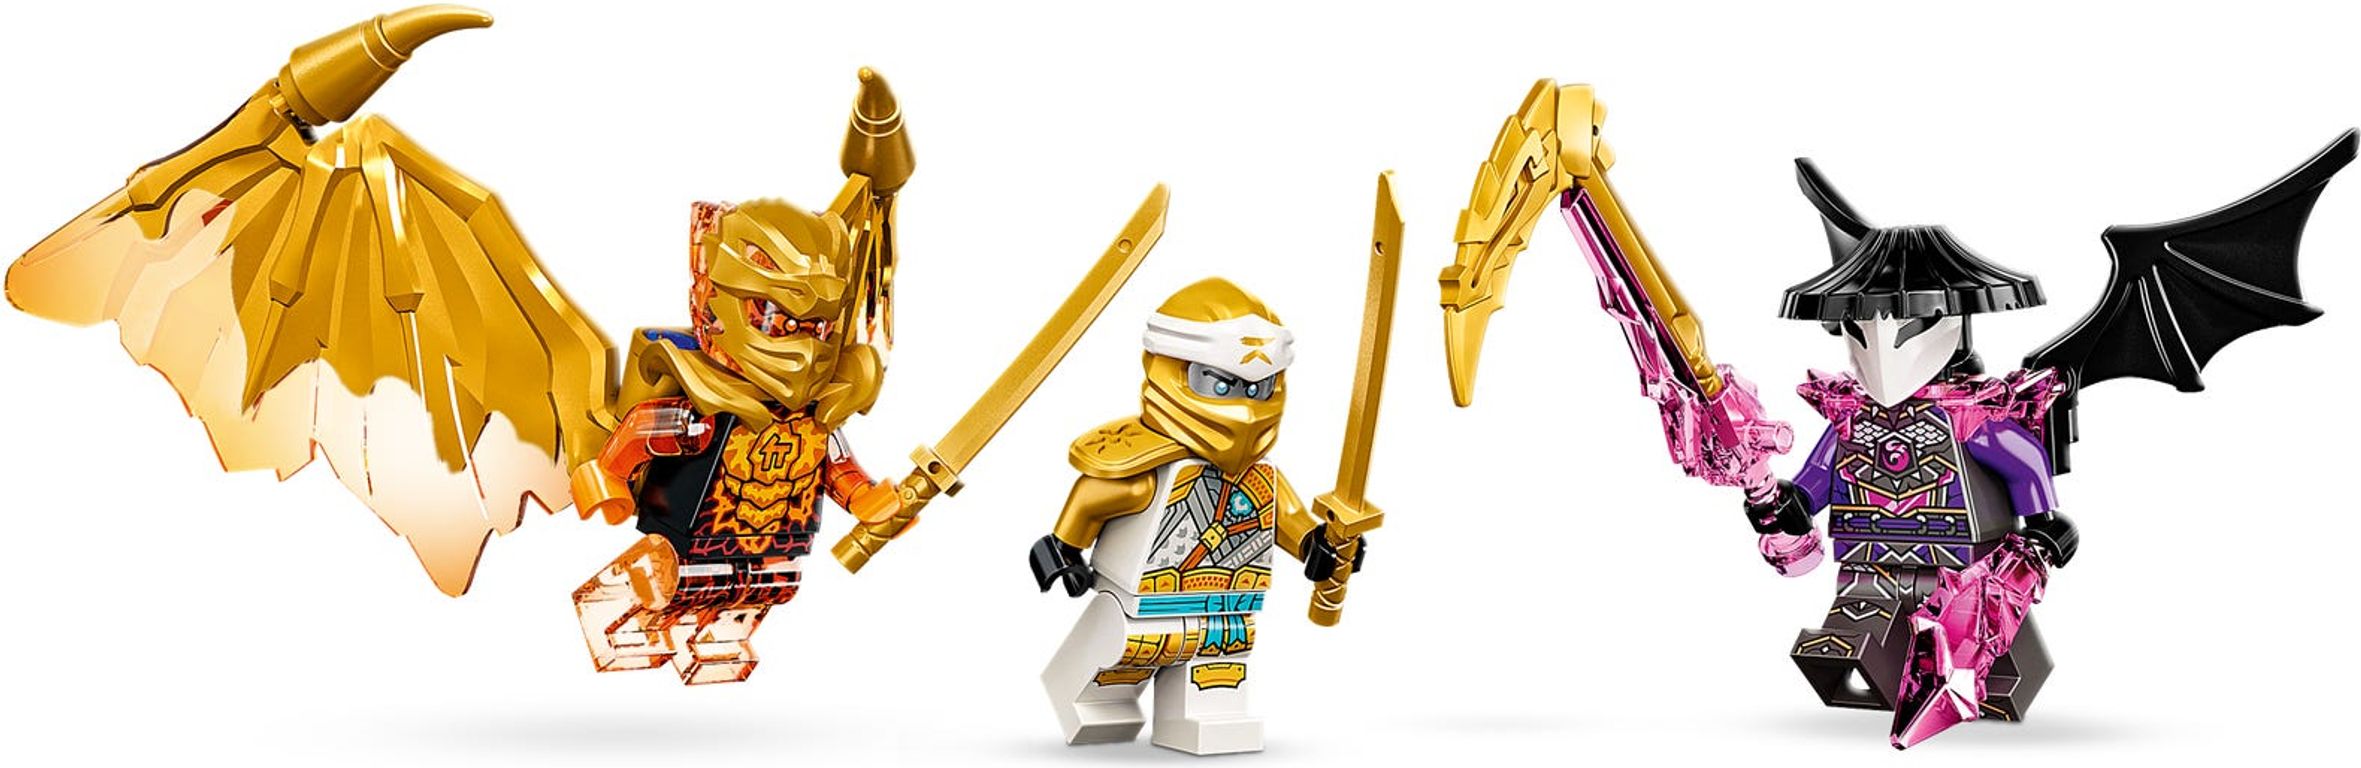 LEGO® Ninjago Zane's Golden Dragon Jet minifigures